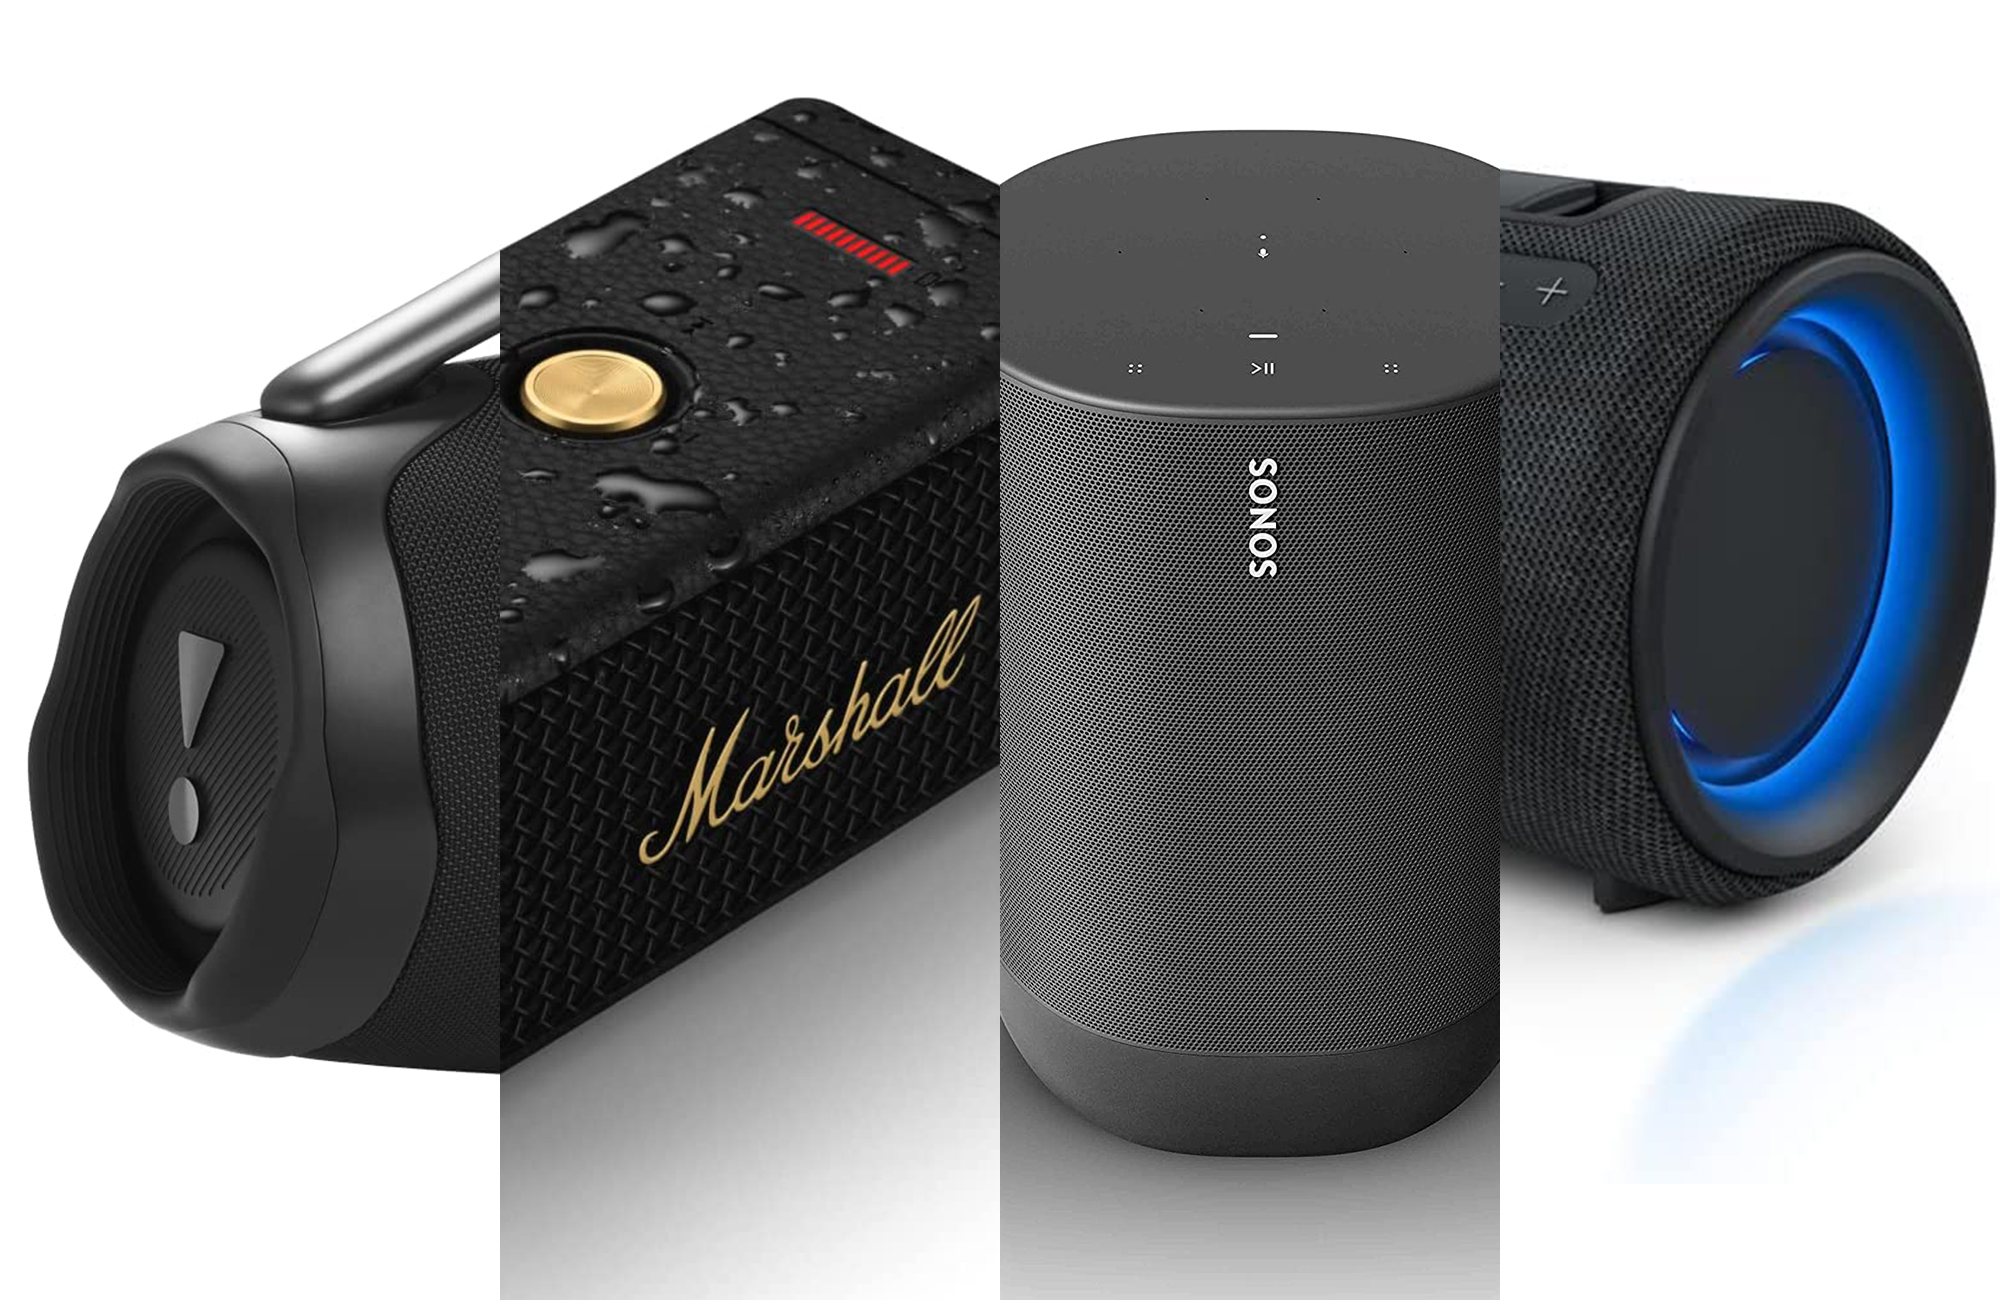 Hands-on review: SOUNDBOKS Gen 3 Bluetooth Performance Speaker